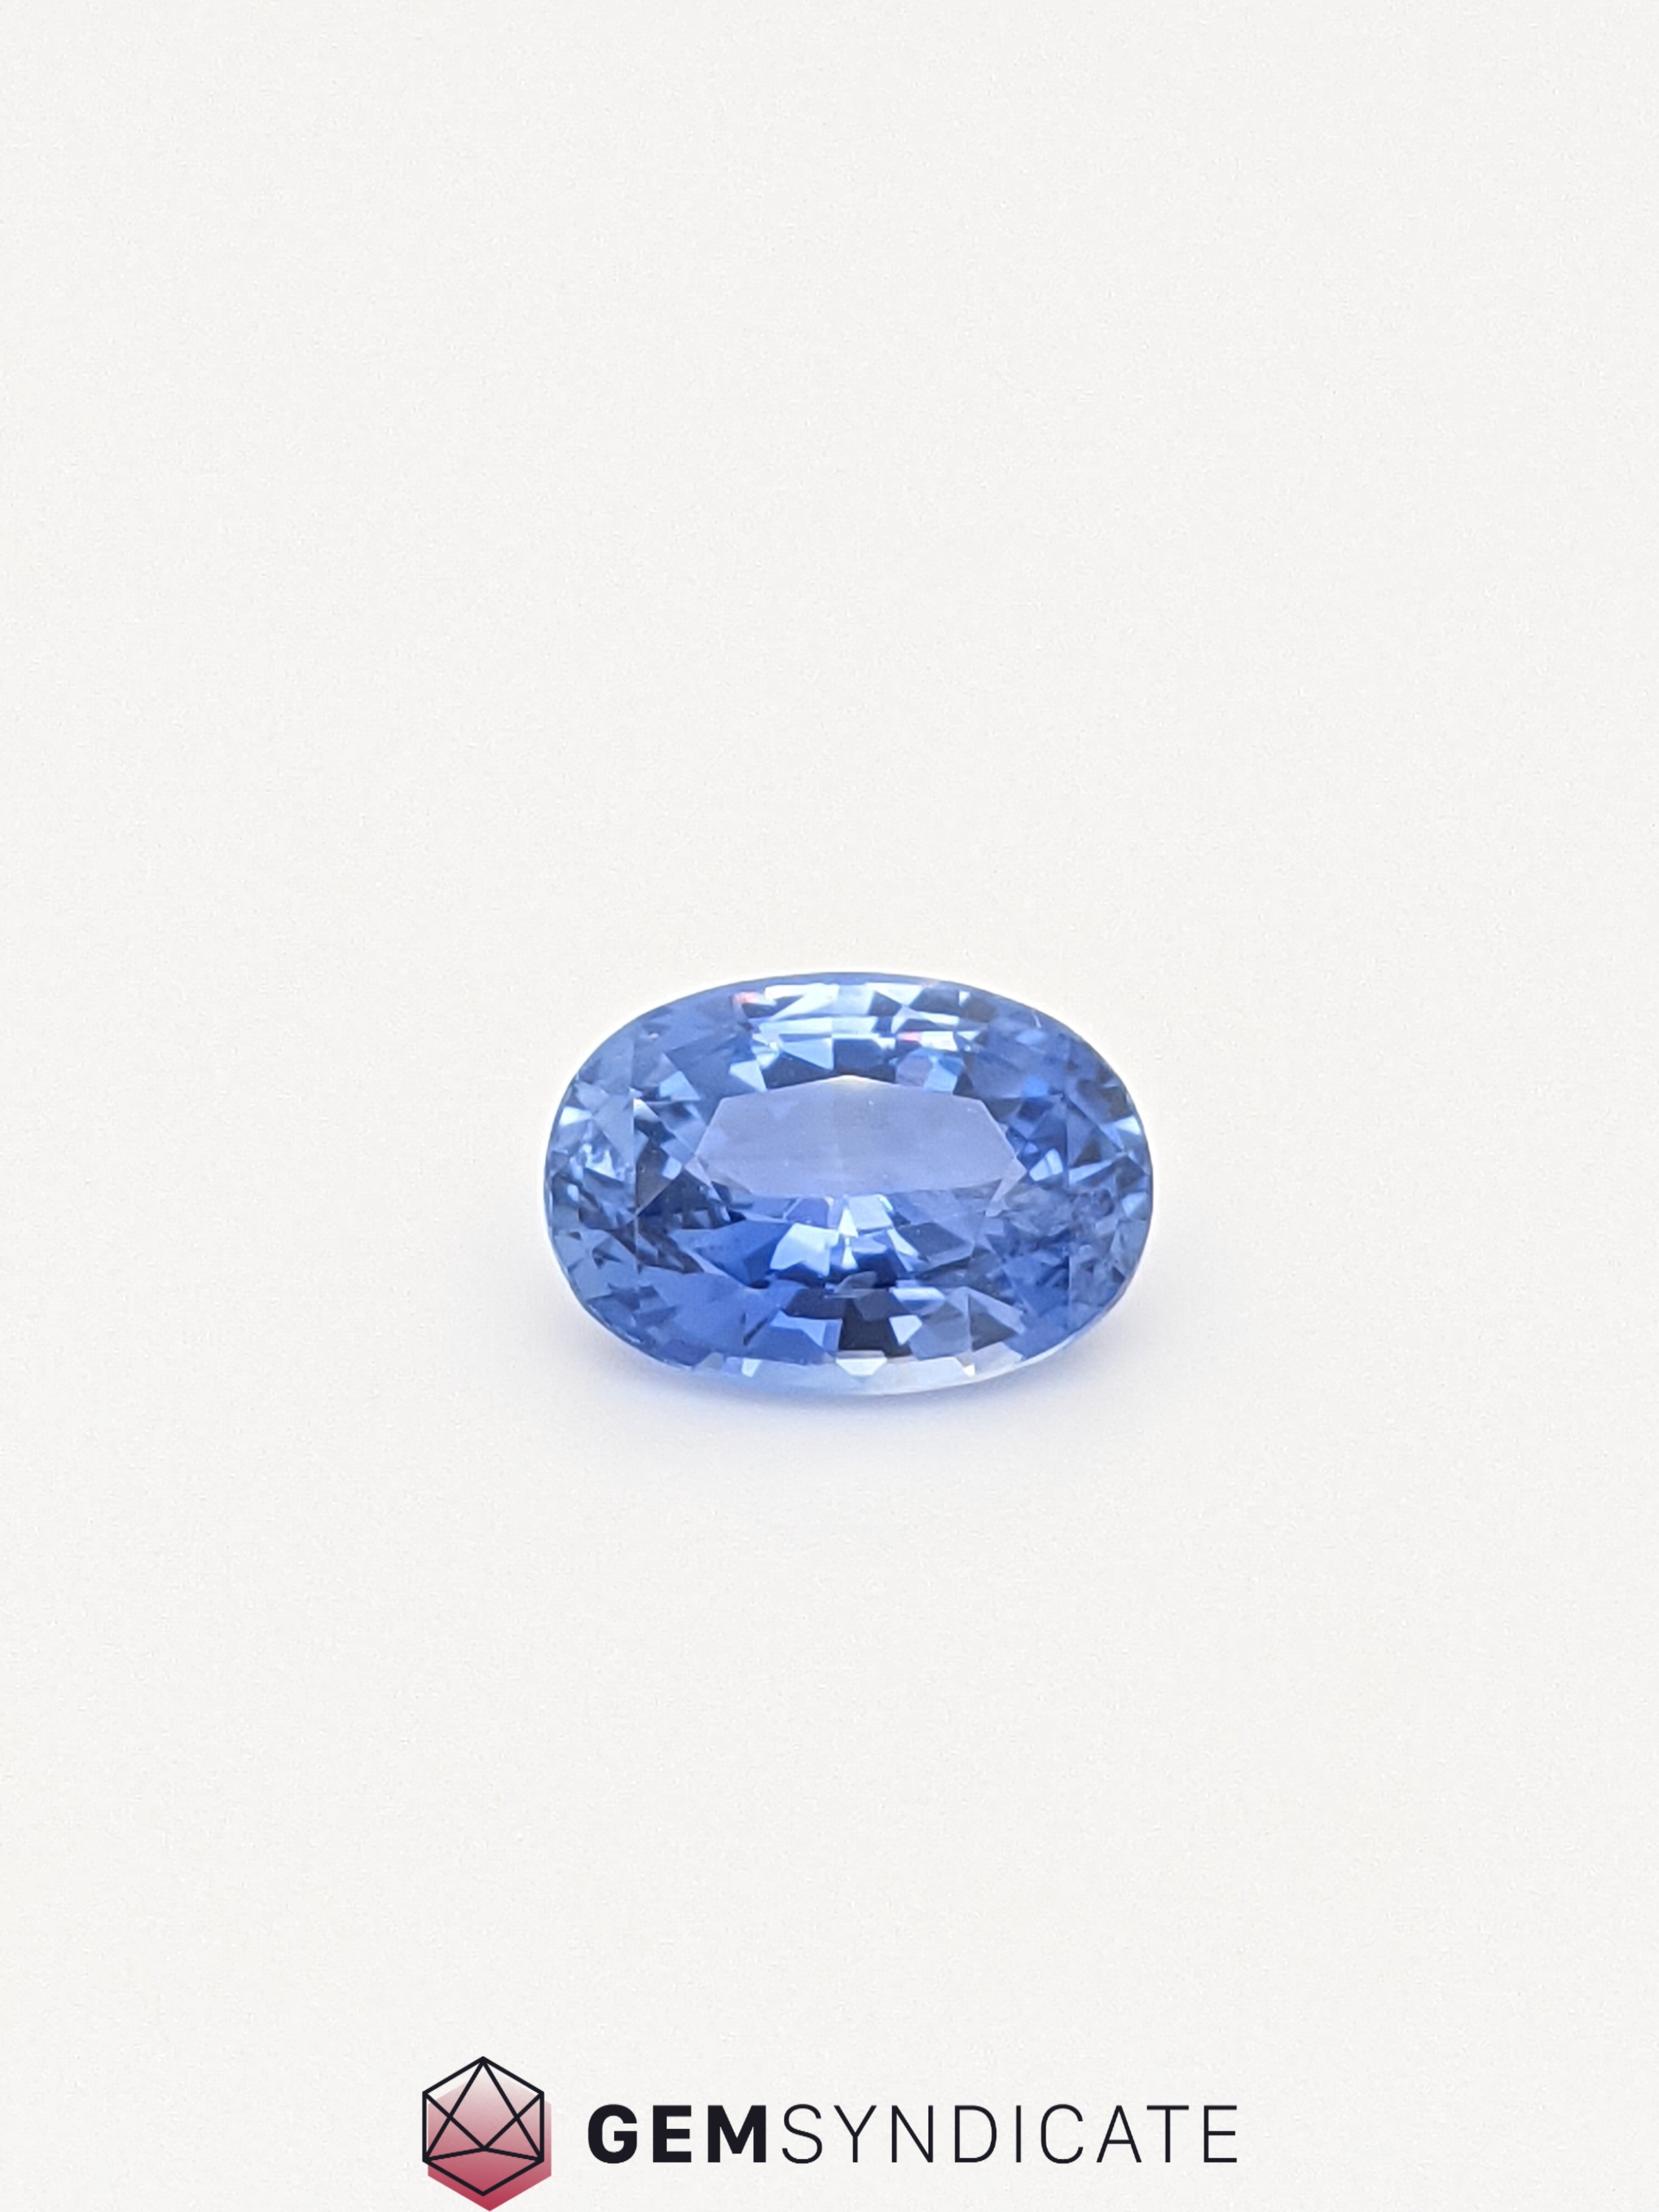 Classy Oval Blue Sapphire 2.57ct